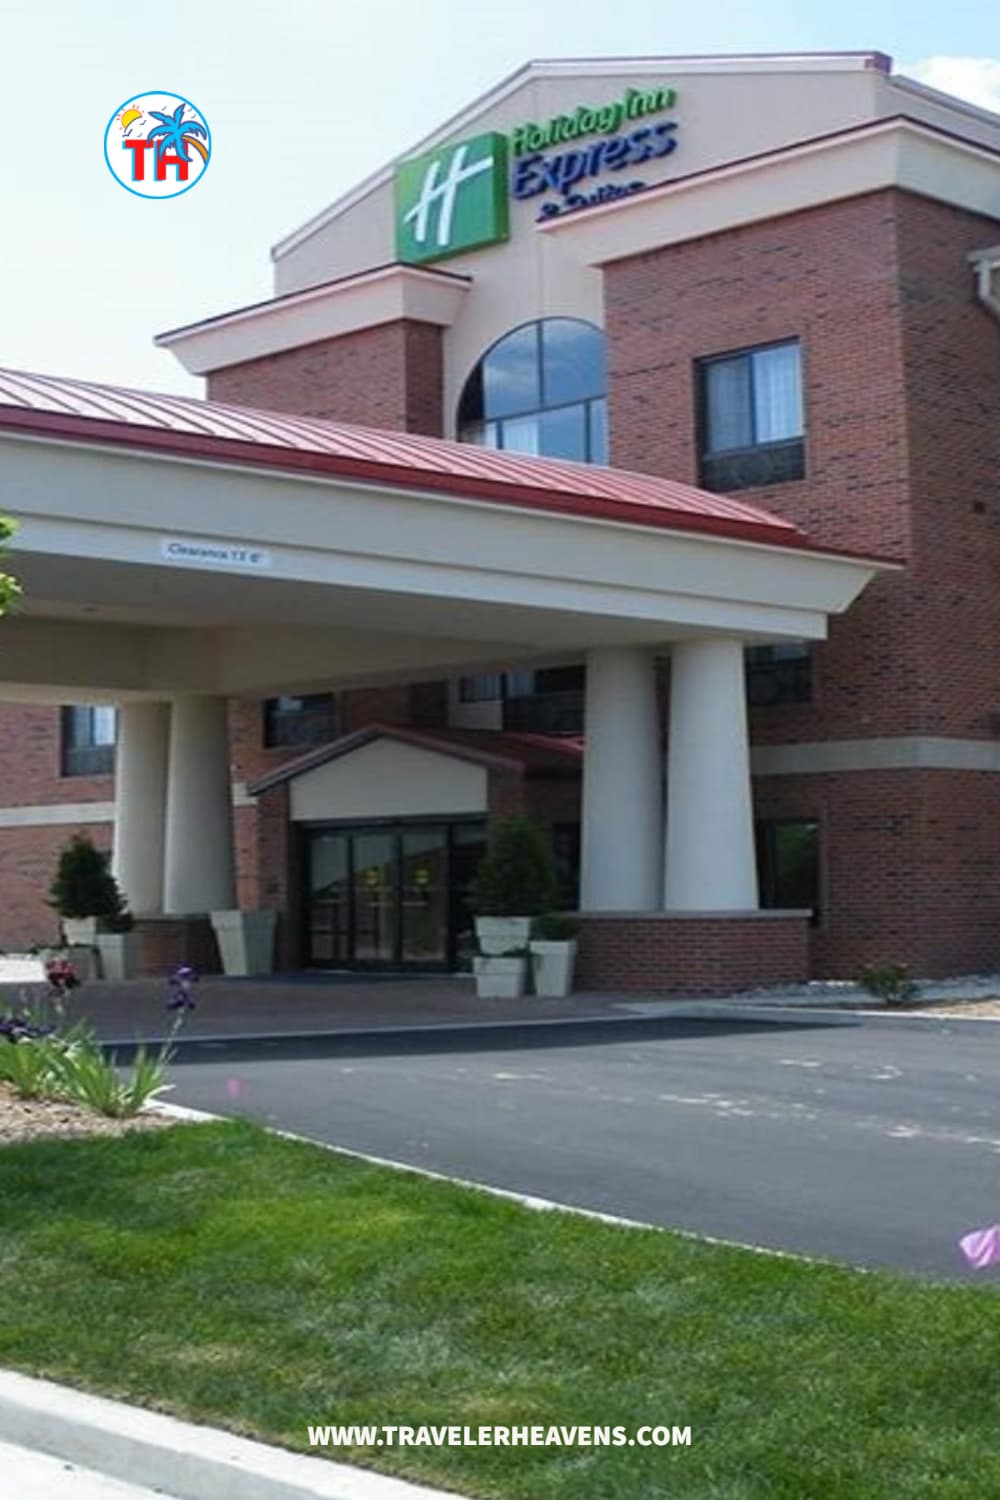 Hotels, Hotels near Sparrow Hospital Lansing MI, Lansing, Michigan Travel Guide, Travel to Michigan, US Destination, Visit Sparrow Hospital Lansing, Tourism